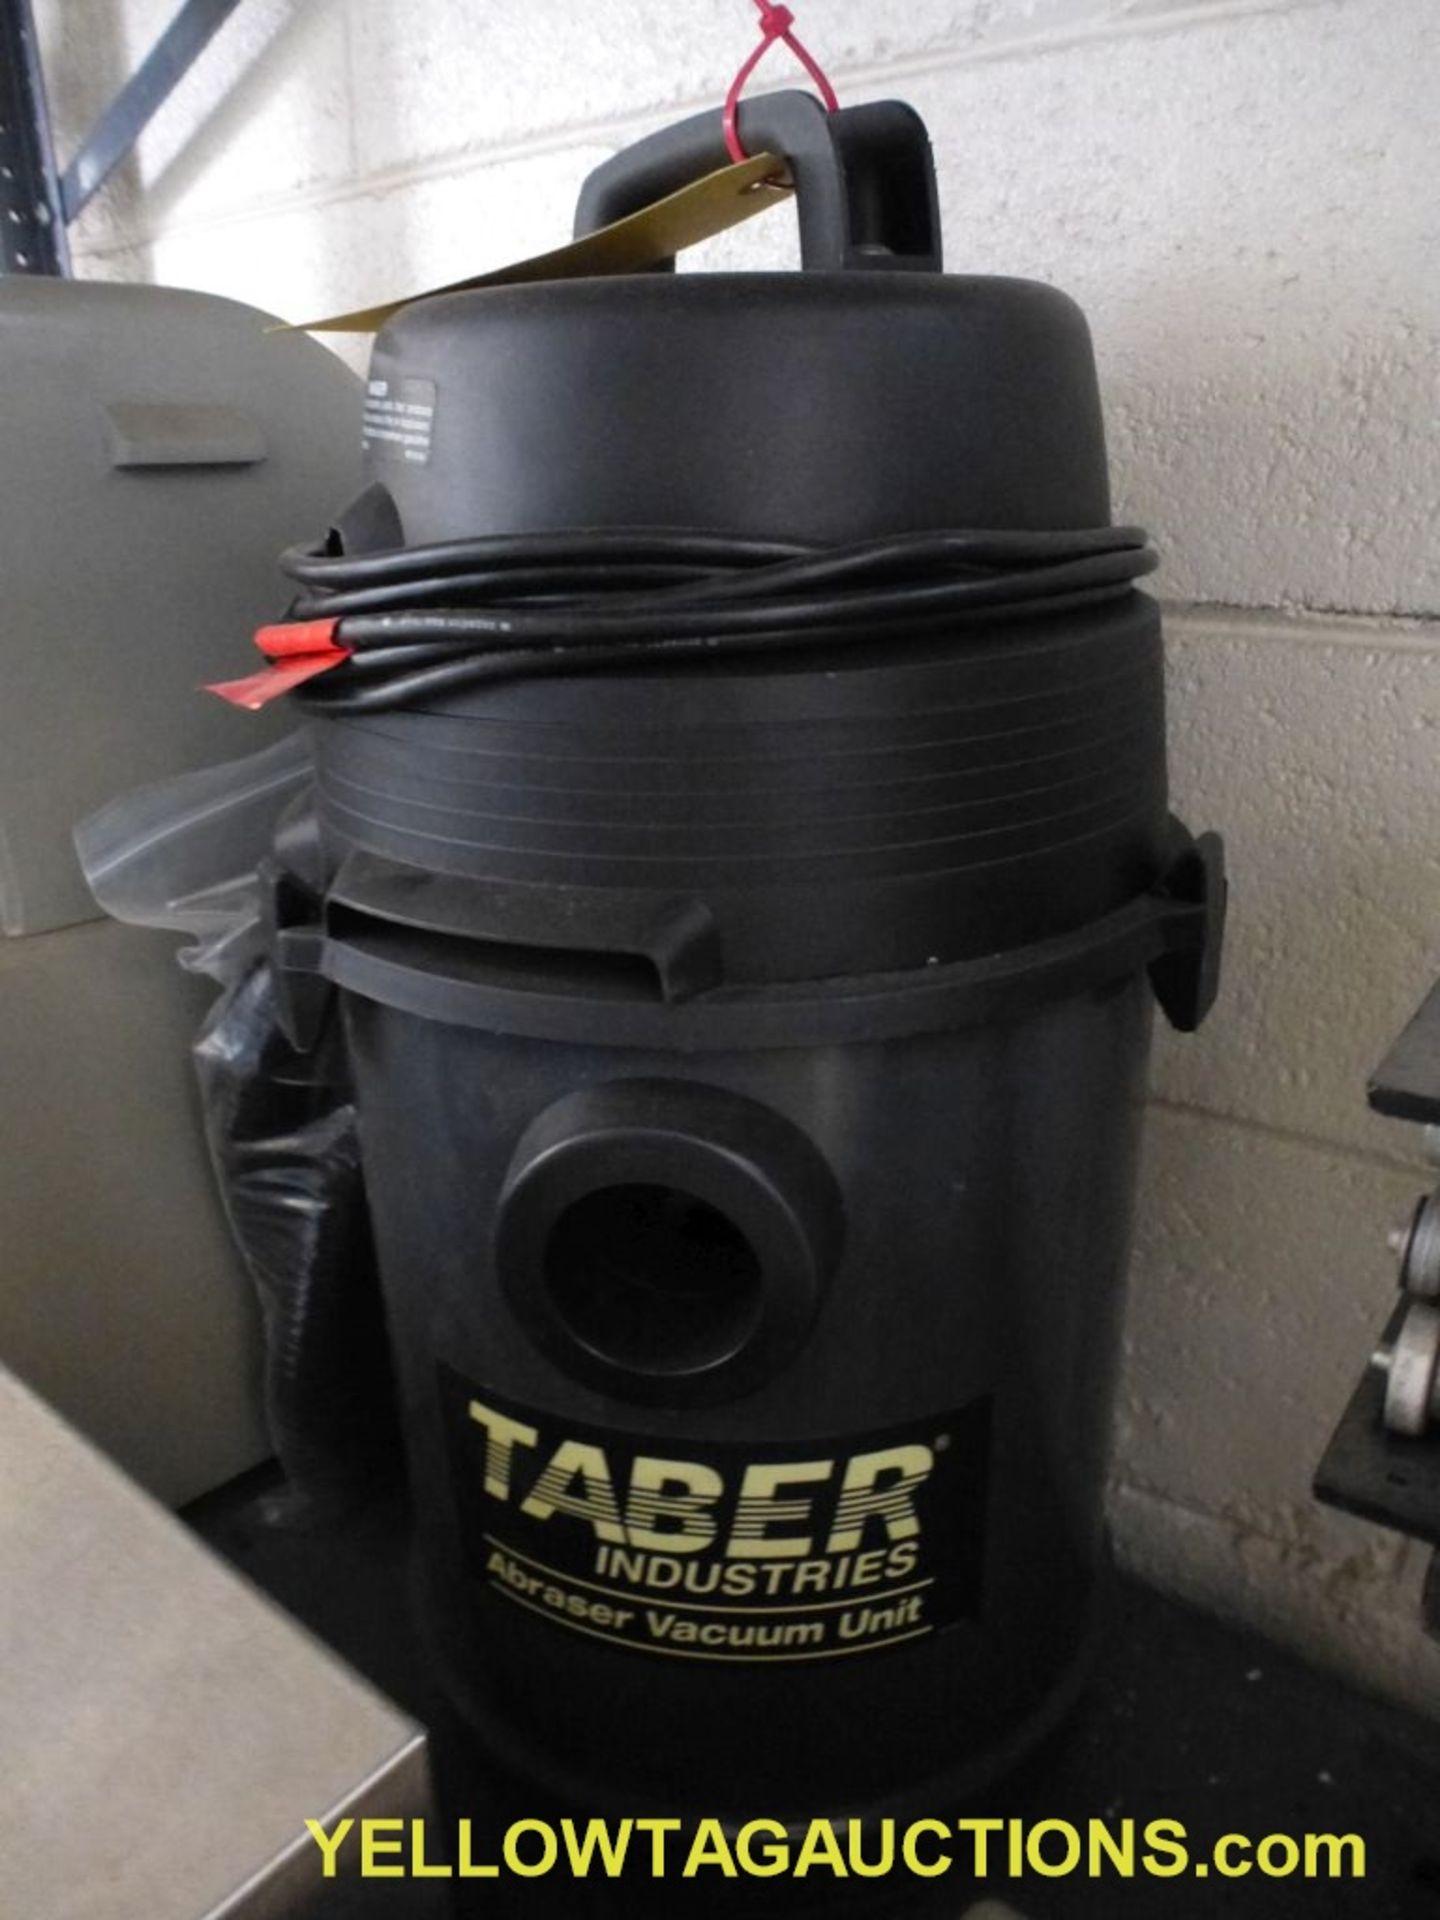 Taber Industries Abraser Vacuum Unit|Location: Charlotte, NC